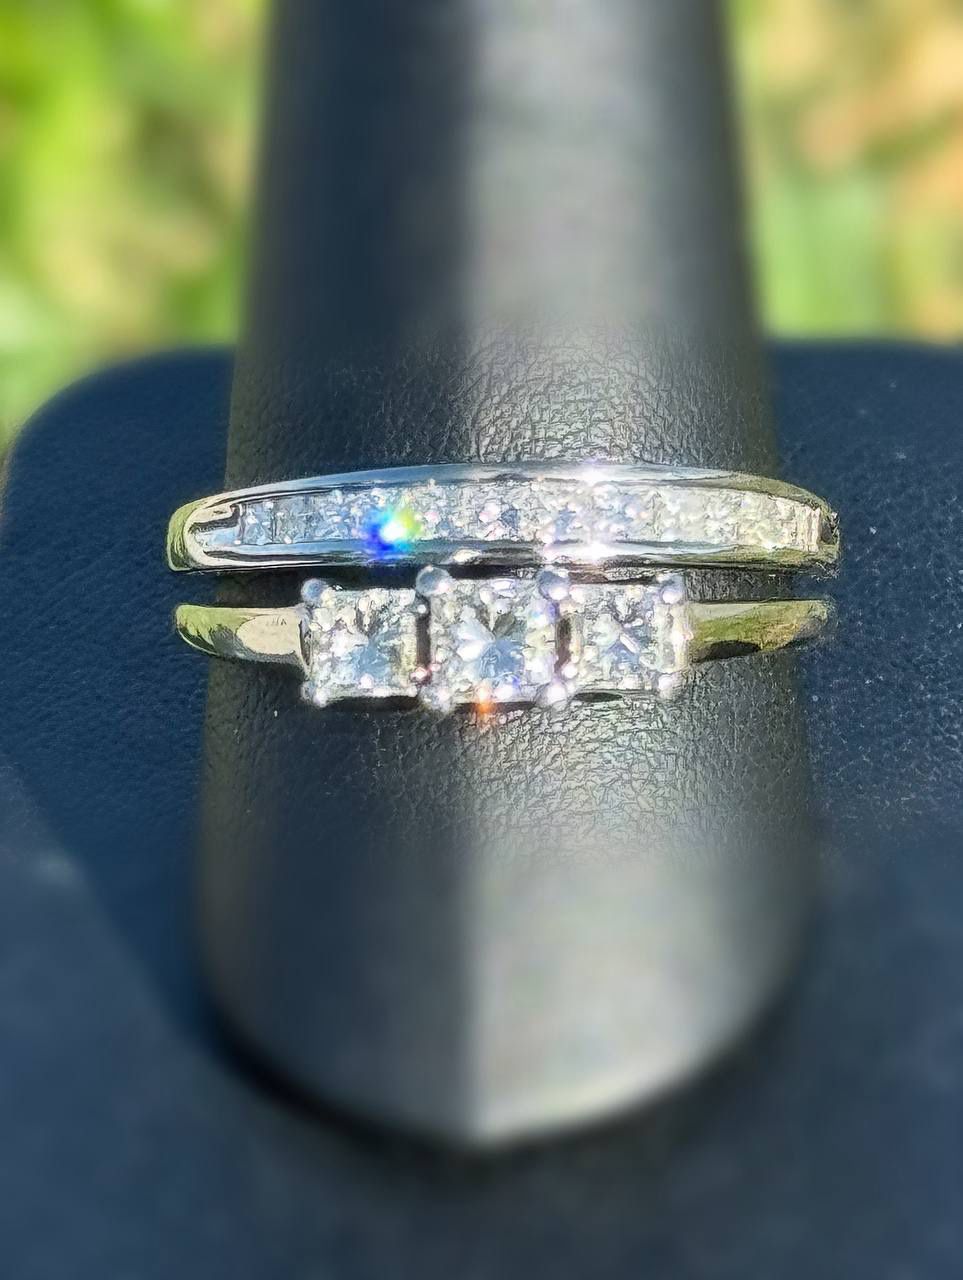 14k White Gold 2.02 CTW Princess Cut Diamond Engagement & Wedding Ring 11 size